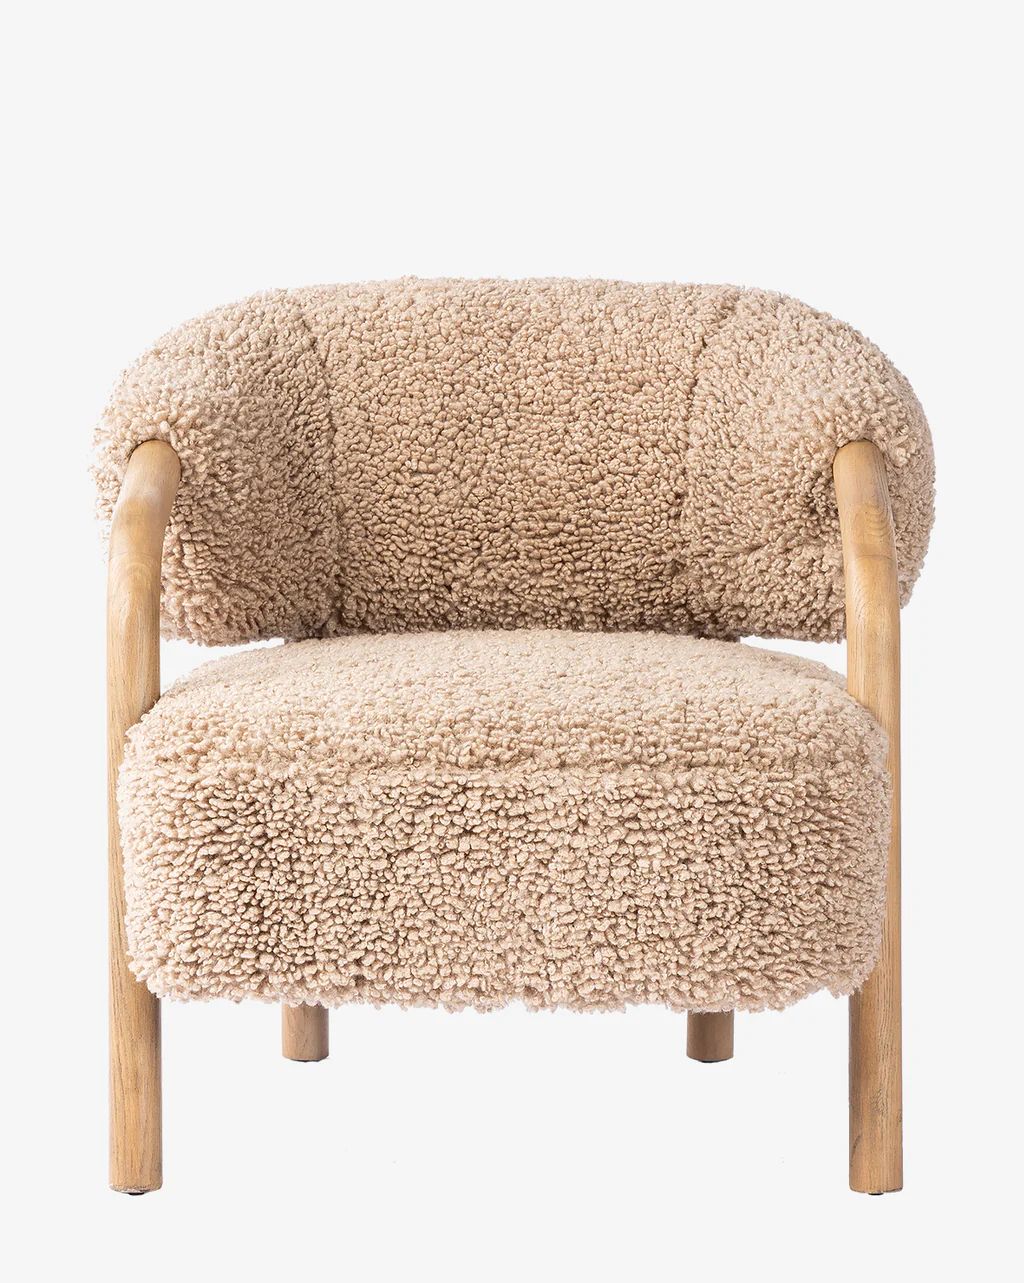 Holstein Lounge Chair | McGee & Co.